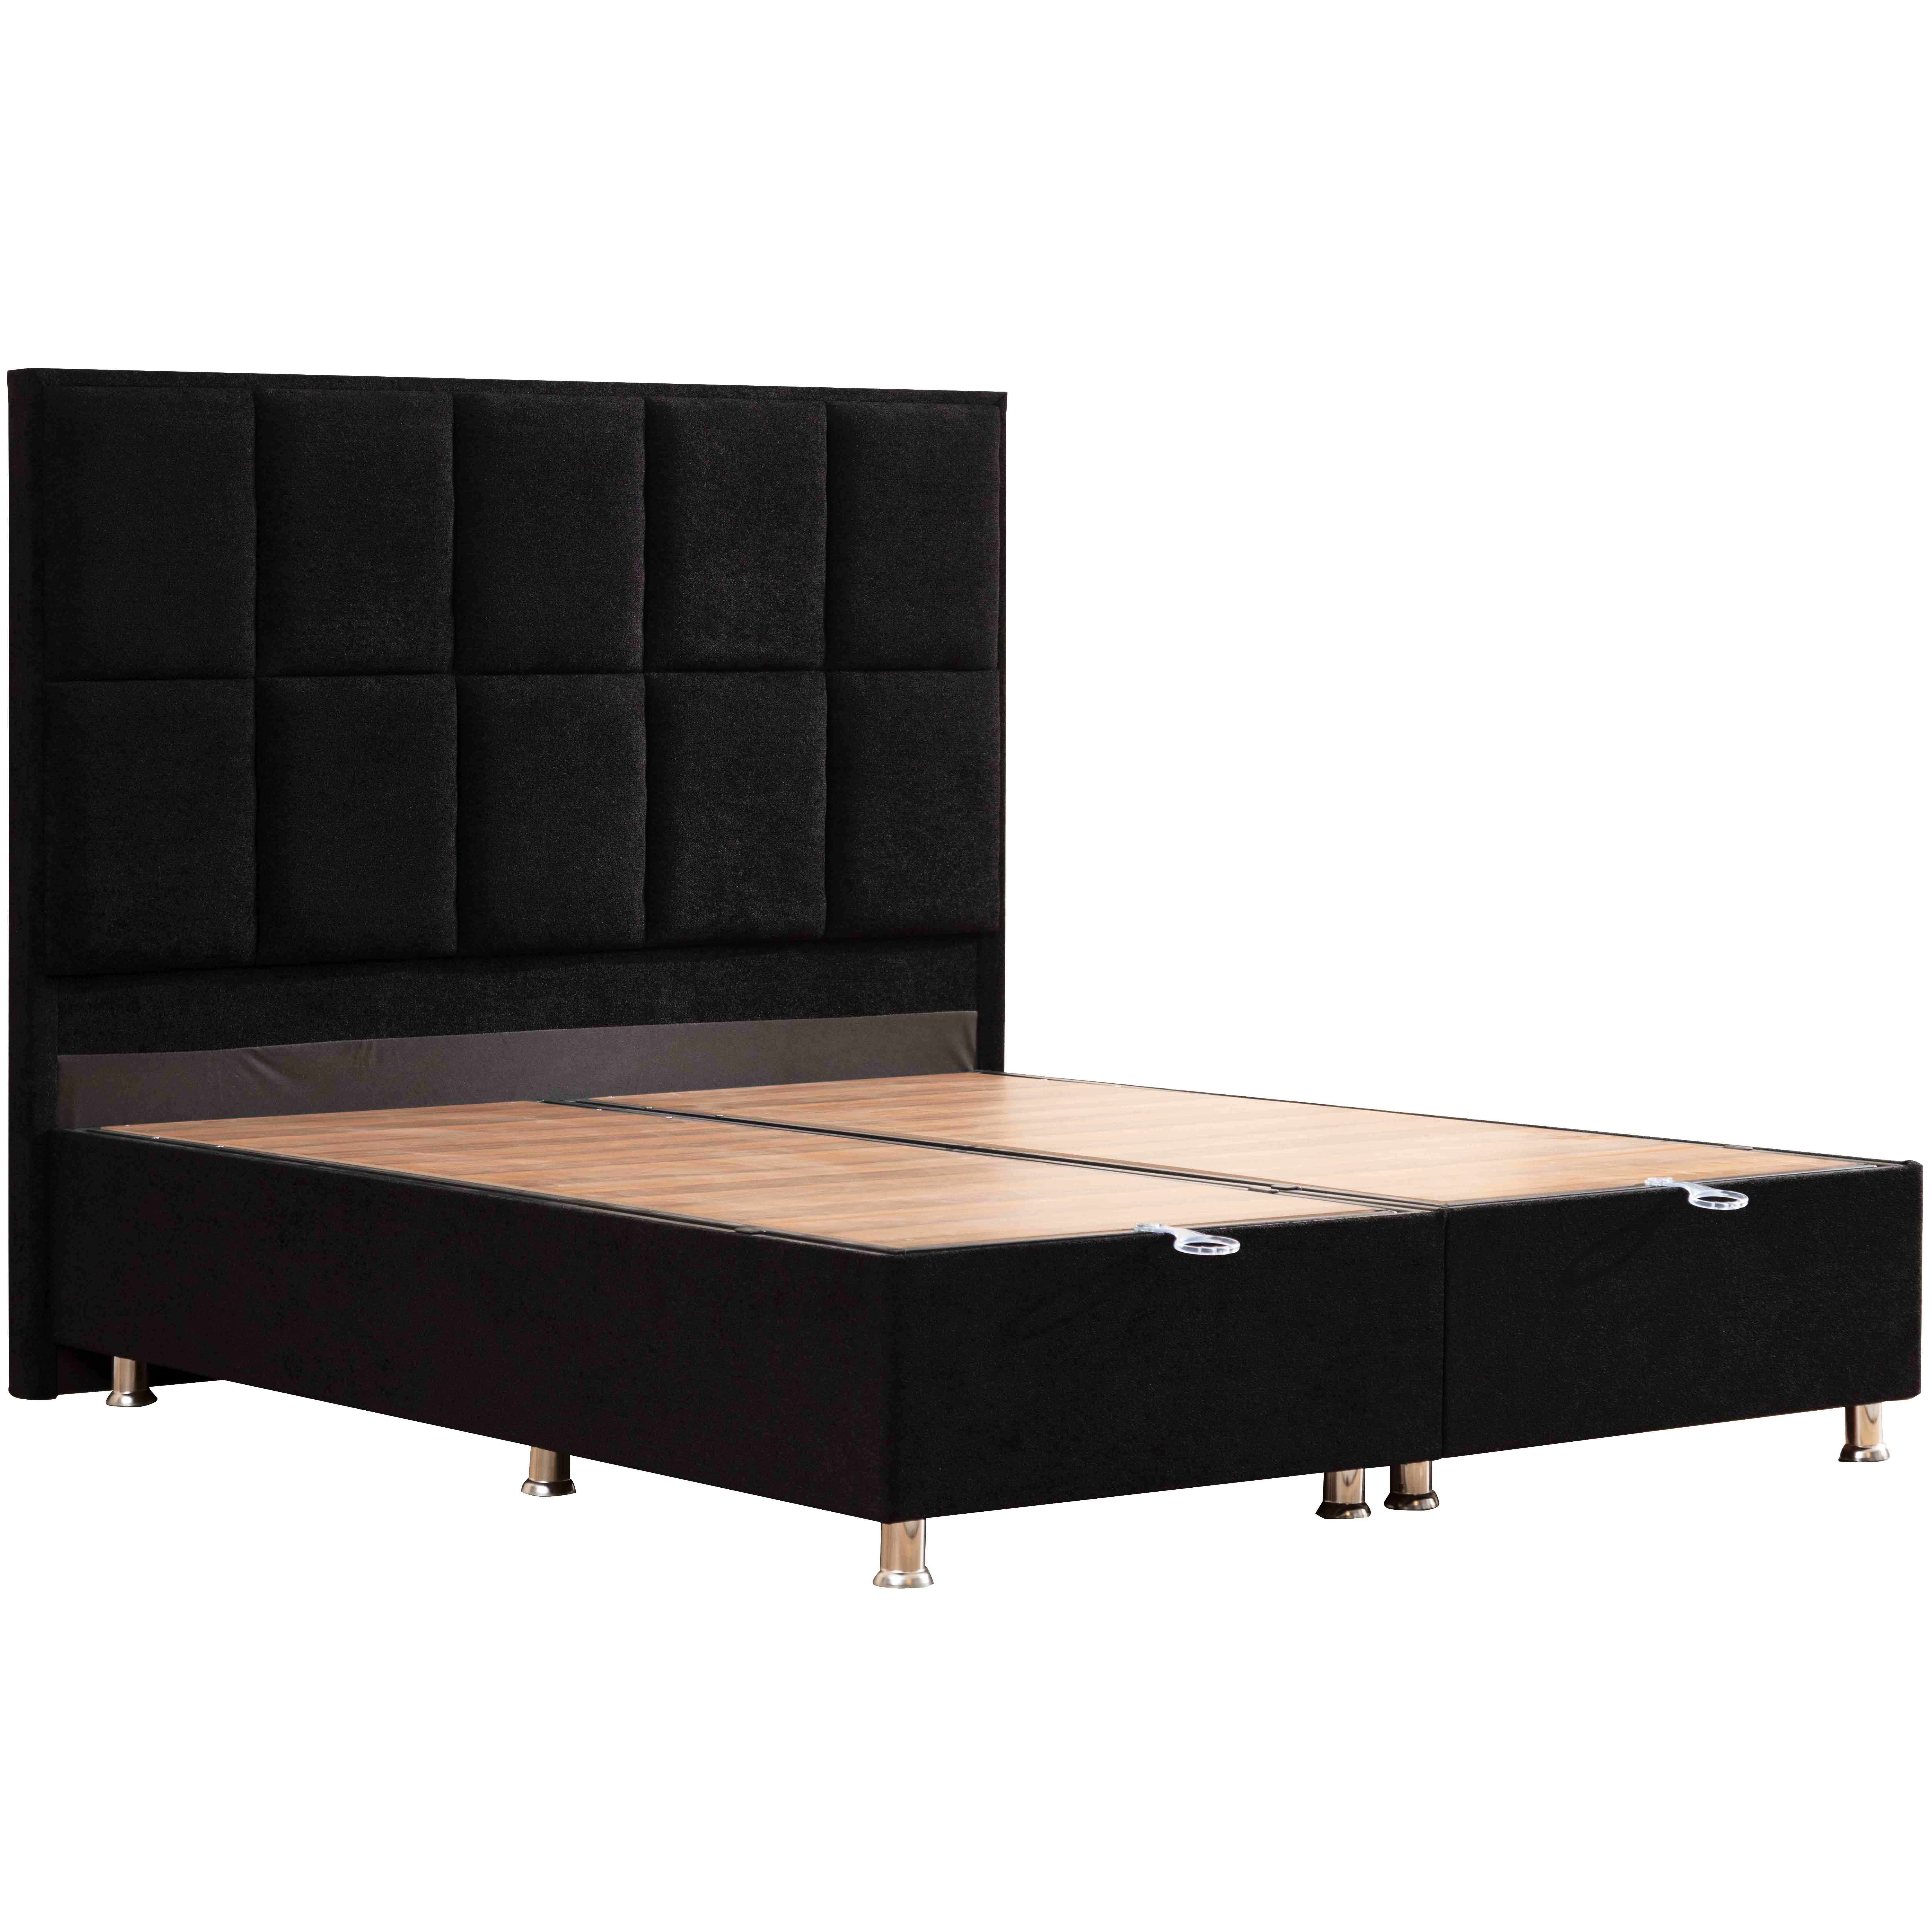 Lovita Bed With Storage 160x200 cm